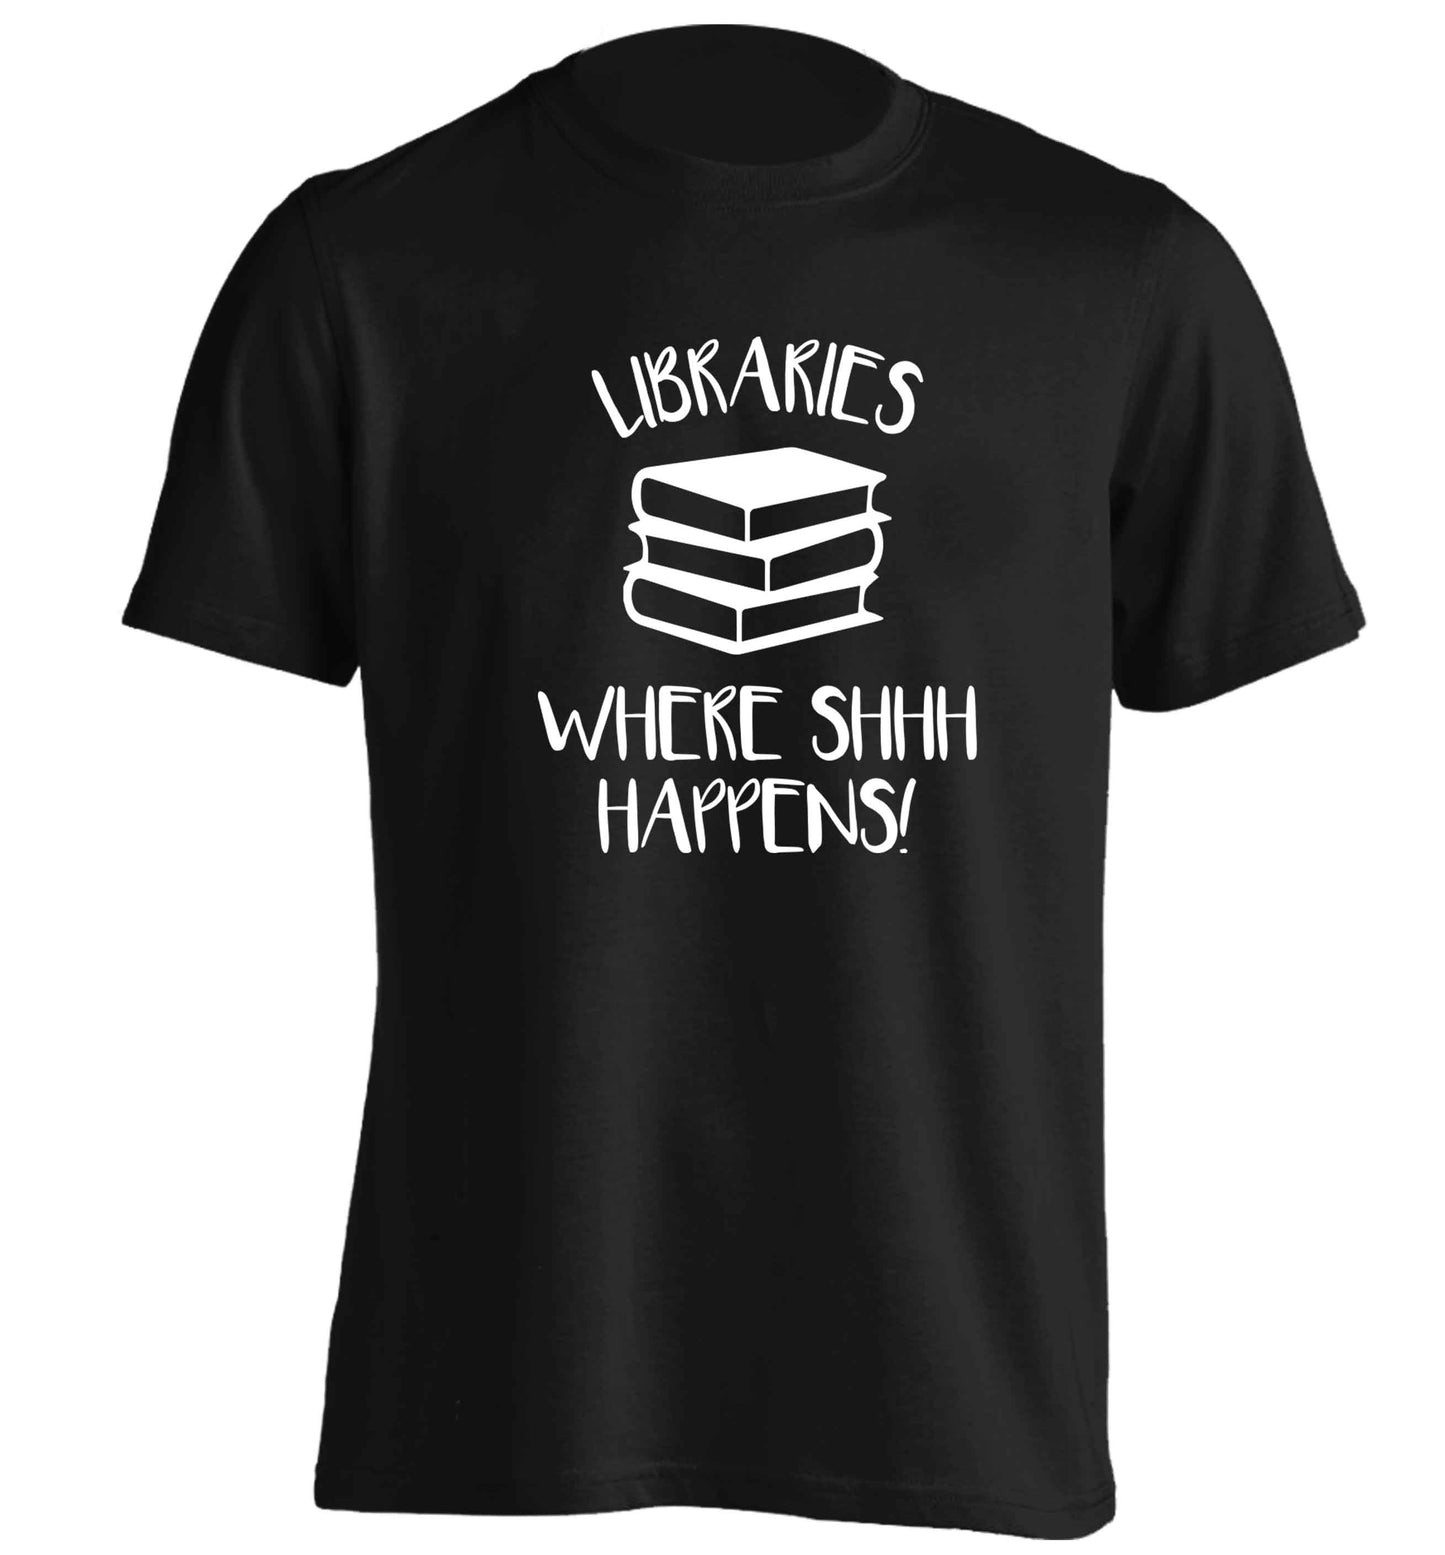 Libraries where shh happens! adults unisex black Tshirt 2XL